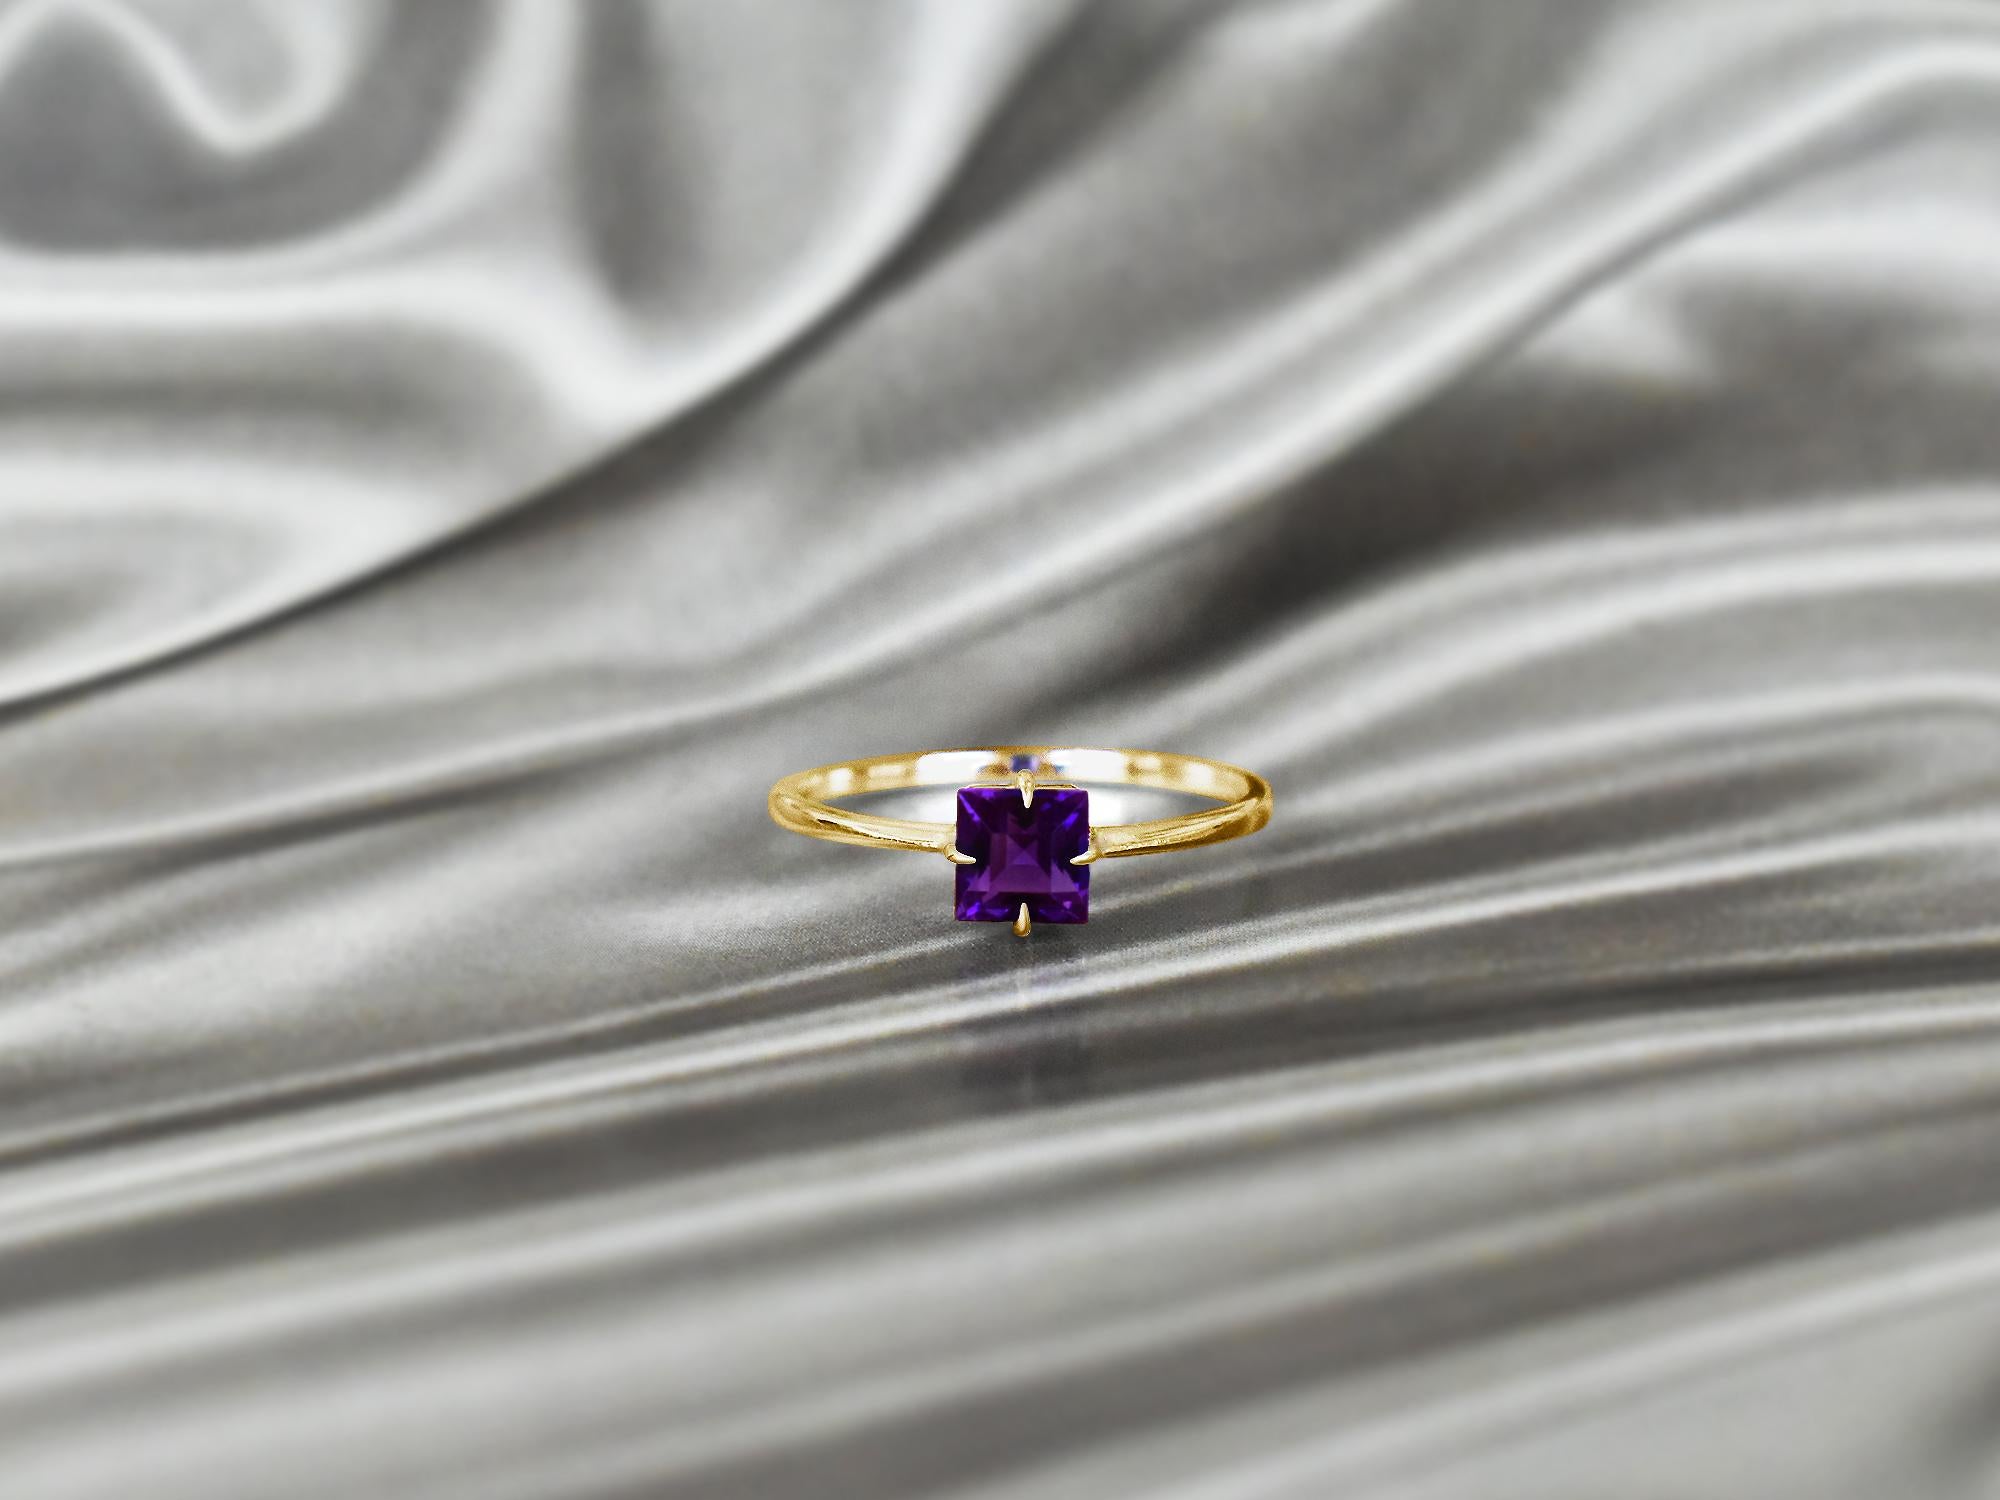 For Sale:  14k Gold Princess Cut 5x5 mm Princess Cut Gemstone Ring Gemstone Engagement Ring 3